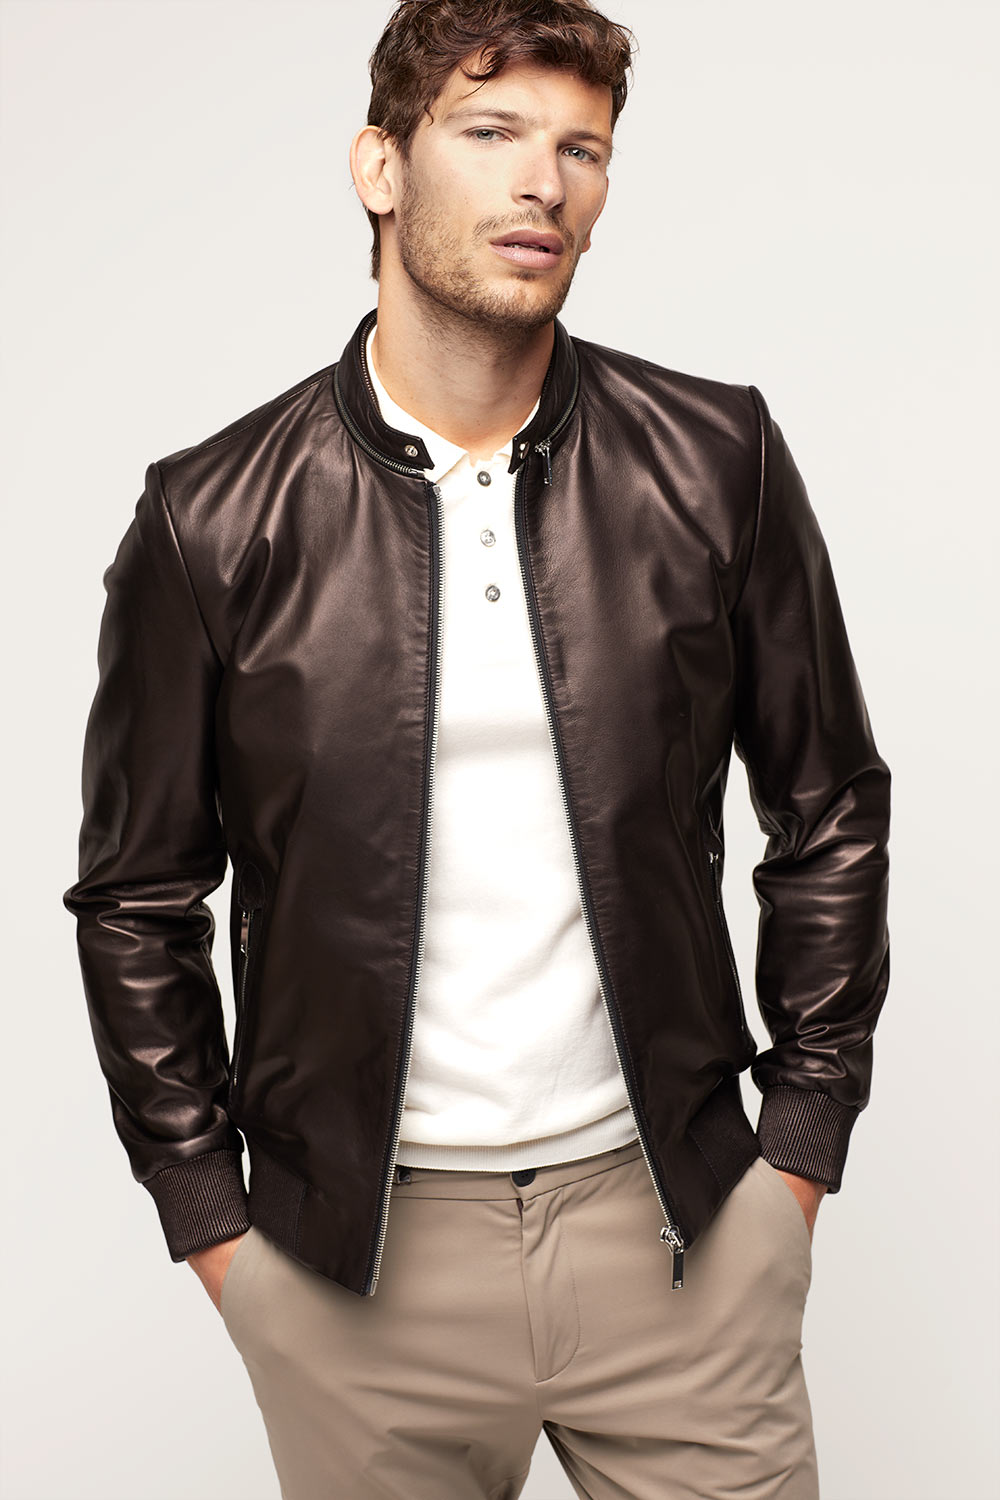 Men's leather jacket | View Moretti's online store – paolomoretti